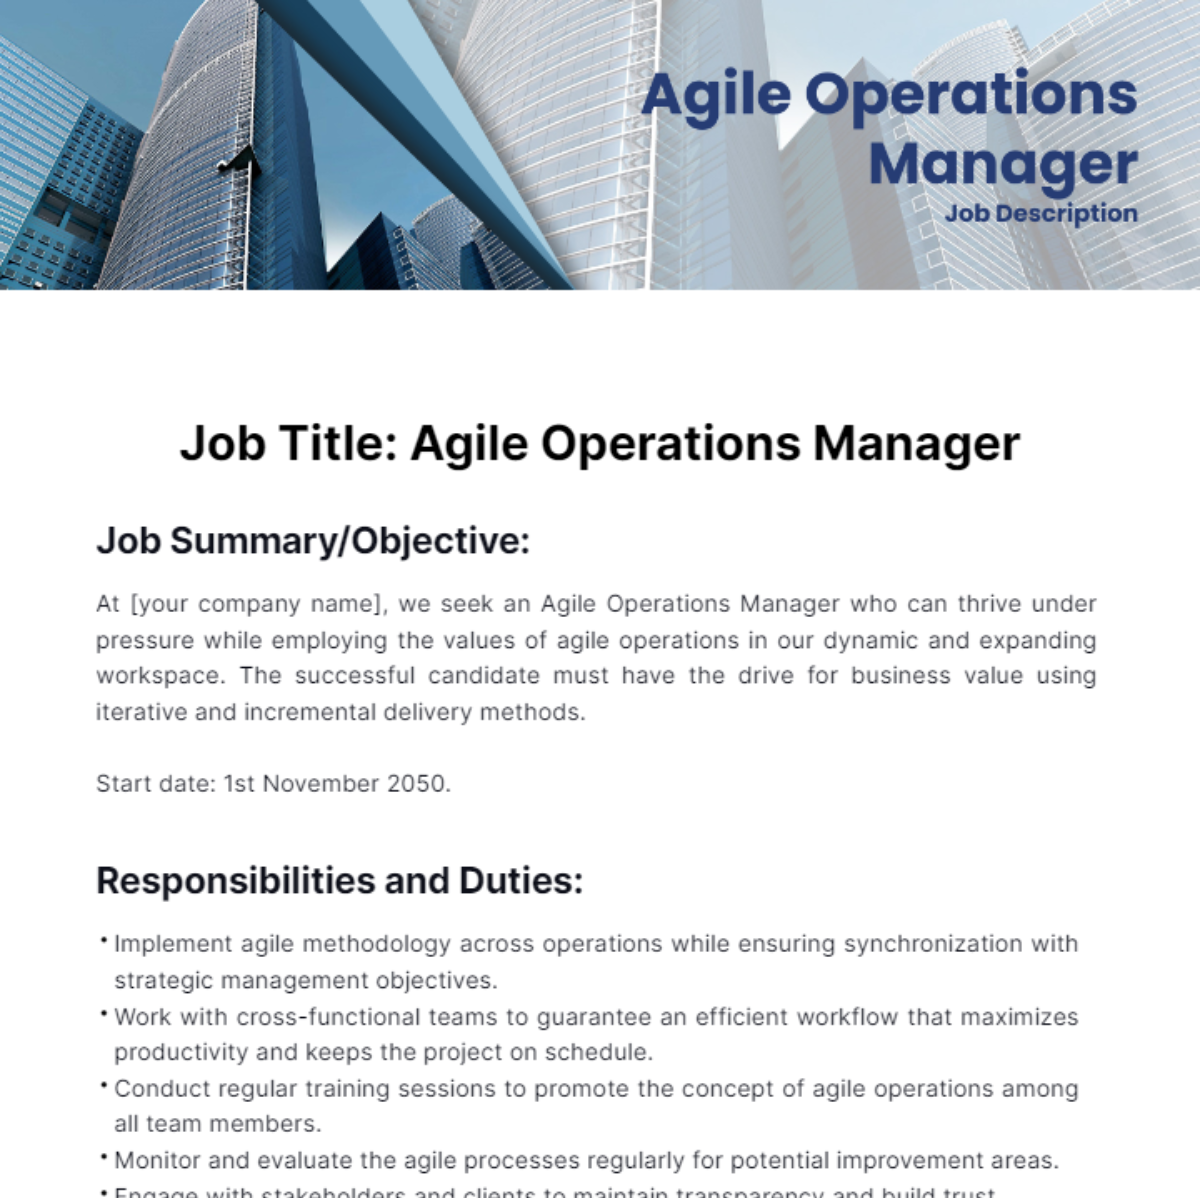 Agile Operations Manager Job Description Template